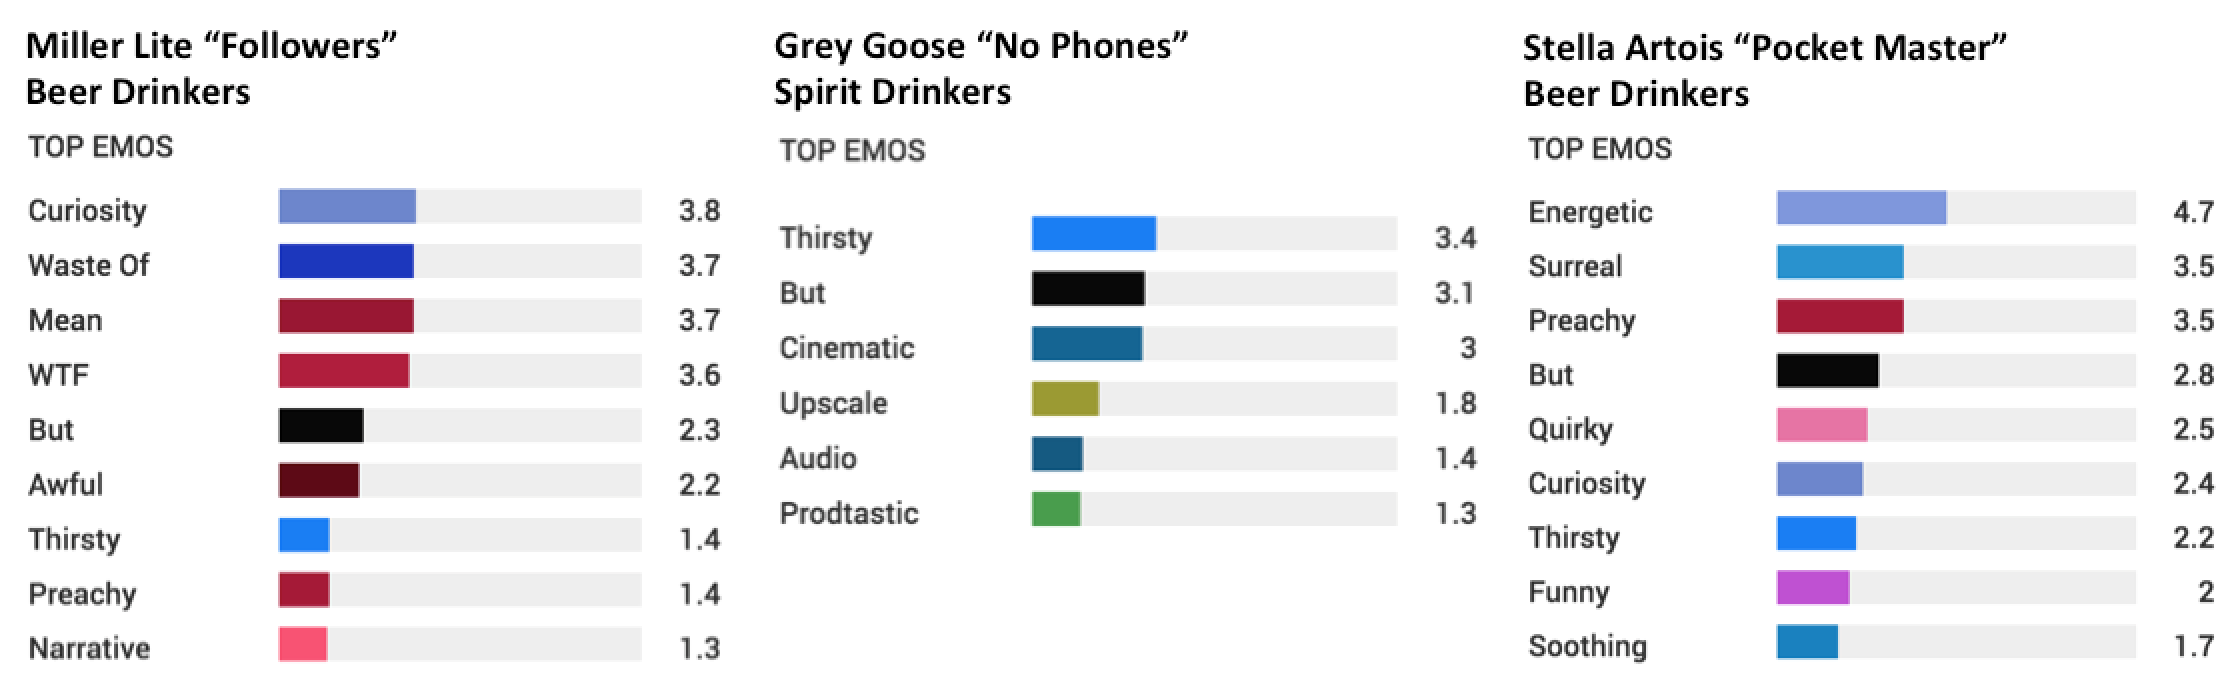 Top Emos: Miller Lite, Grey Goose, Stella Artois